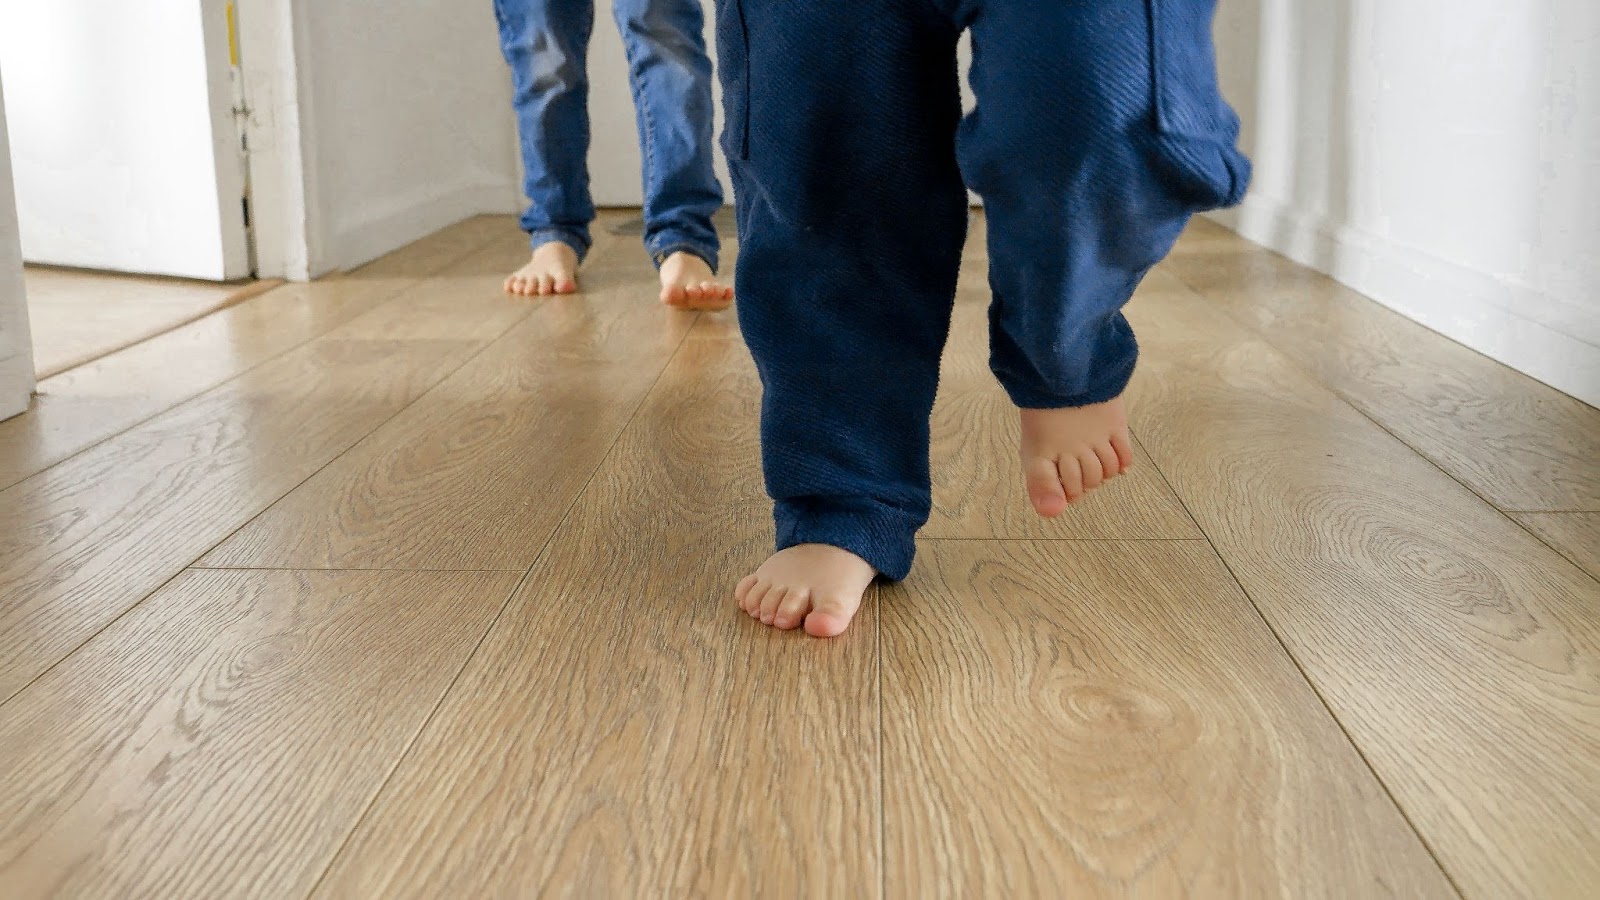 The sight of happy children's feet dancing on the wooden floor in the house's corridor.